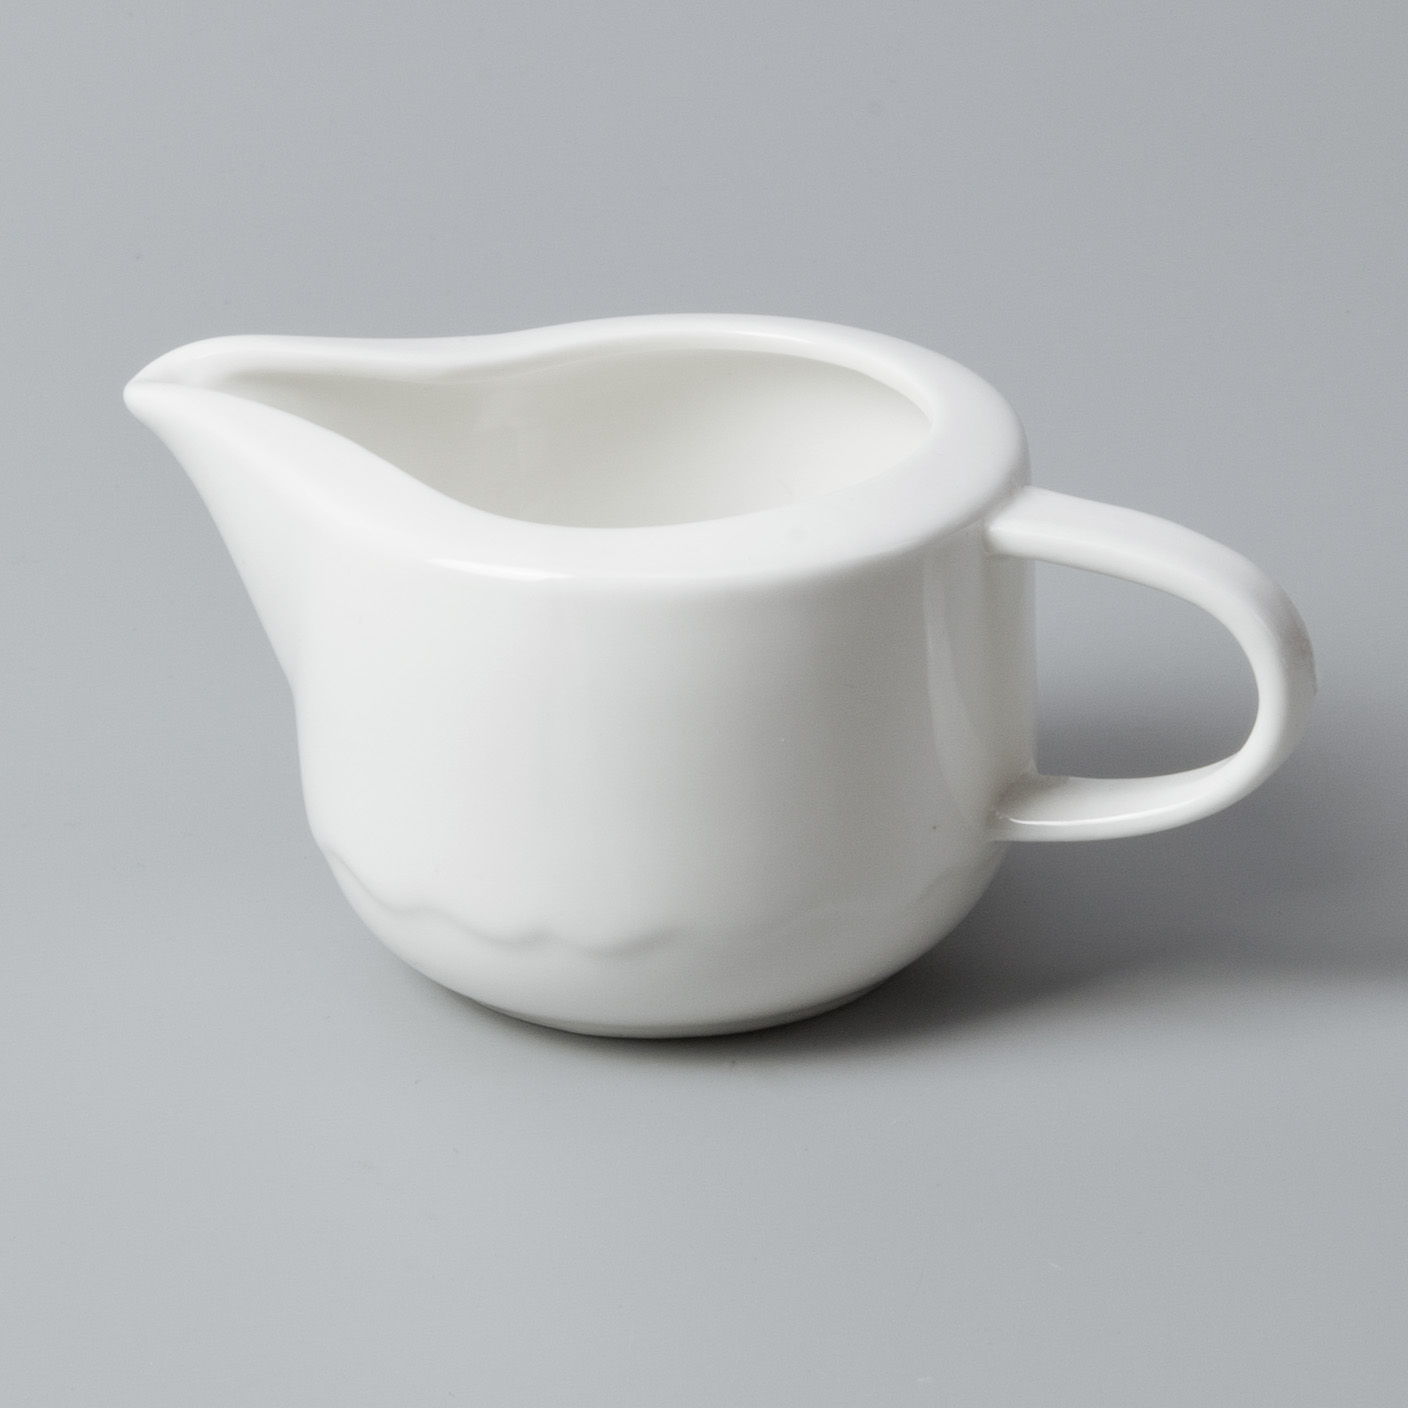 casual white porcelain dish set series for restaurant-9